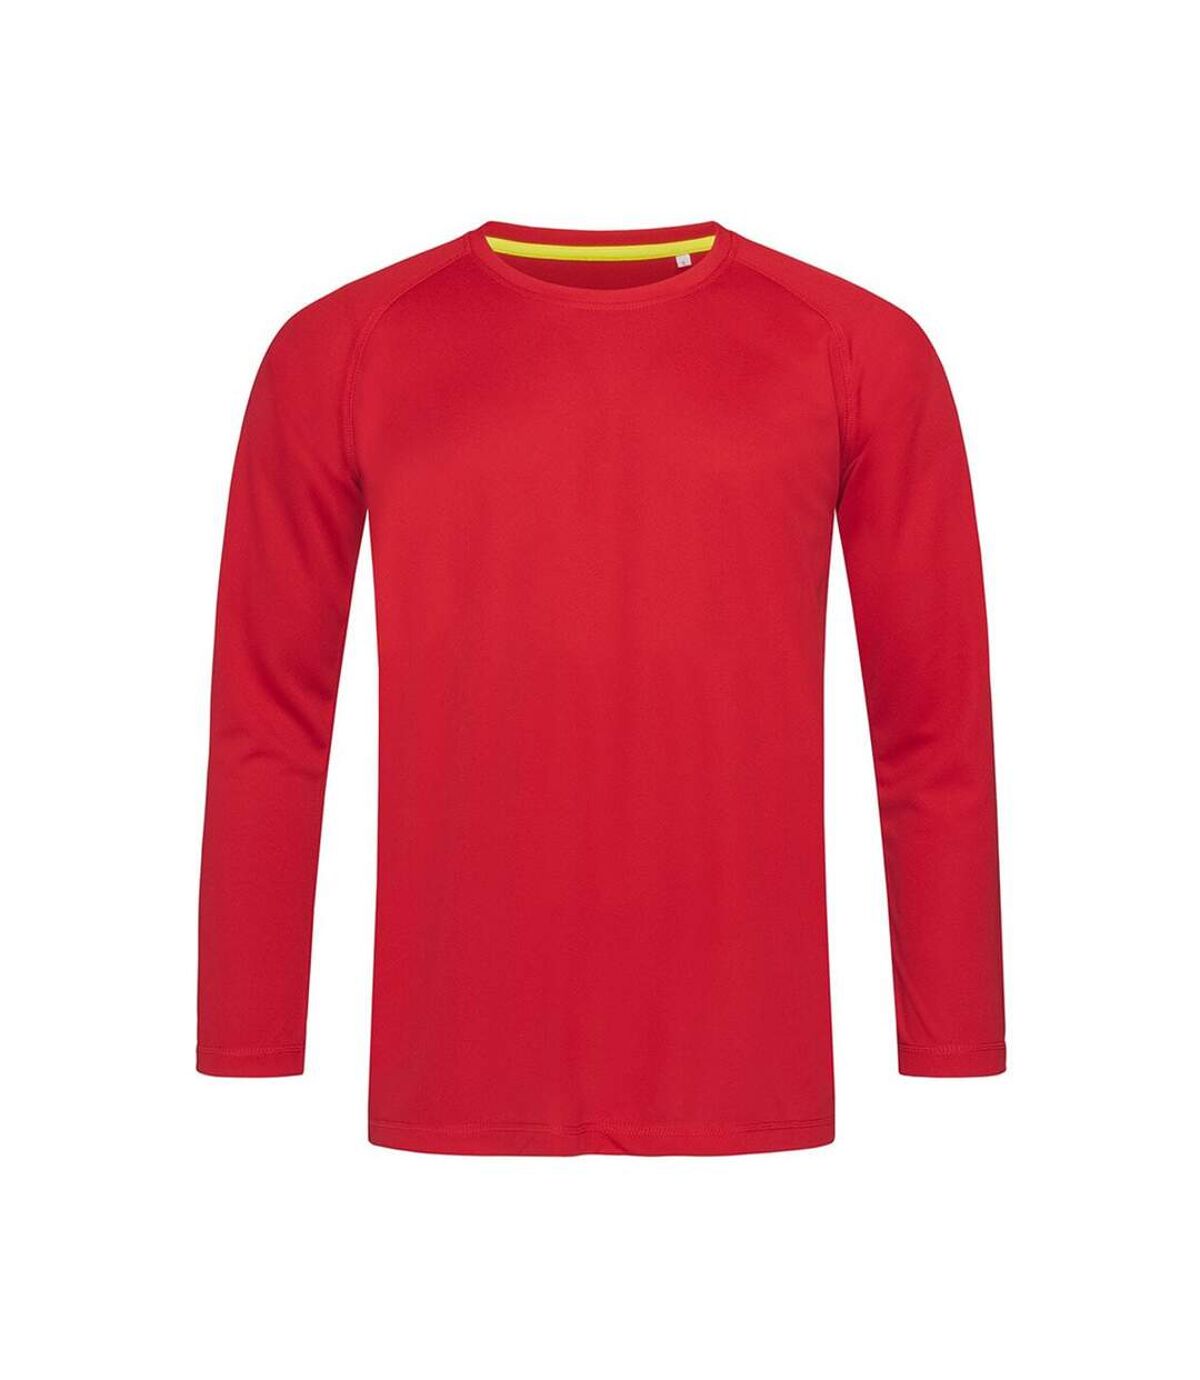 Stedman - T-shirt ACTIVE - Hommes (Rouge) - UTAB344